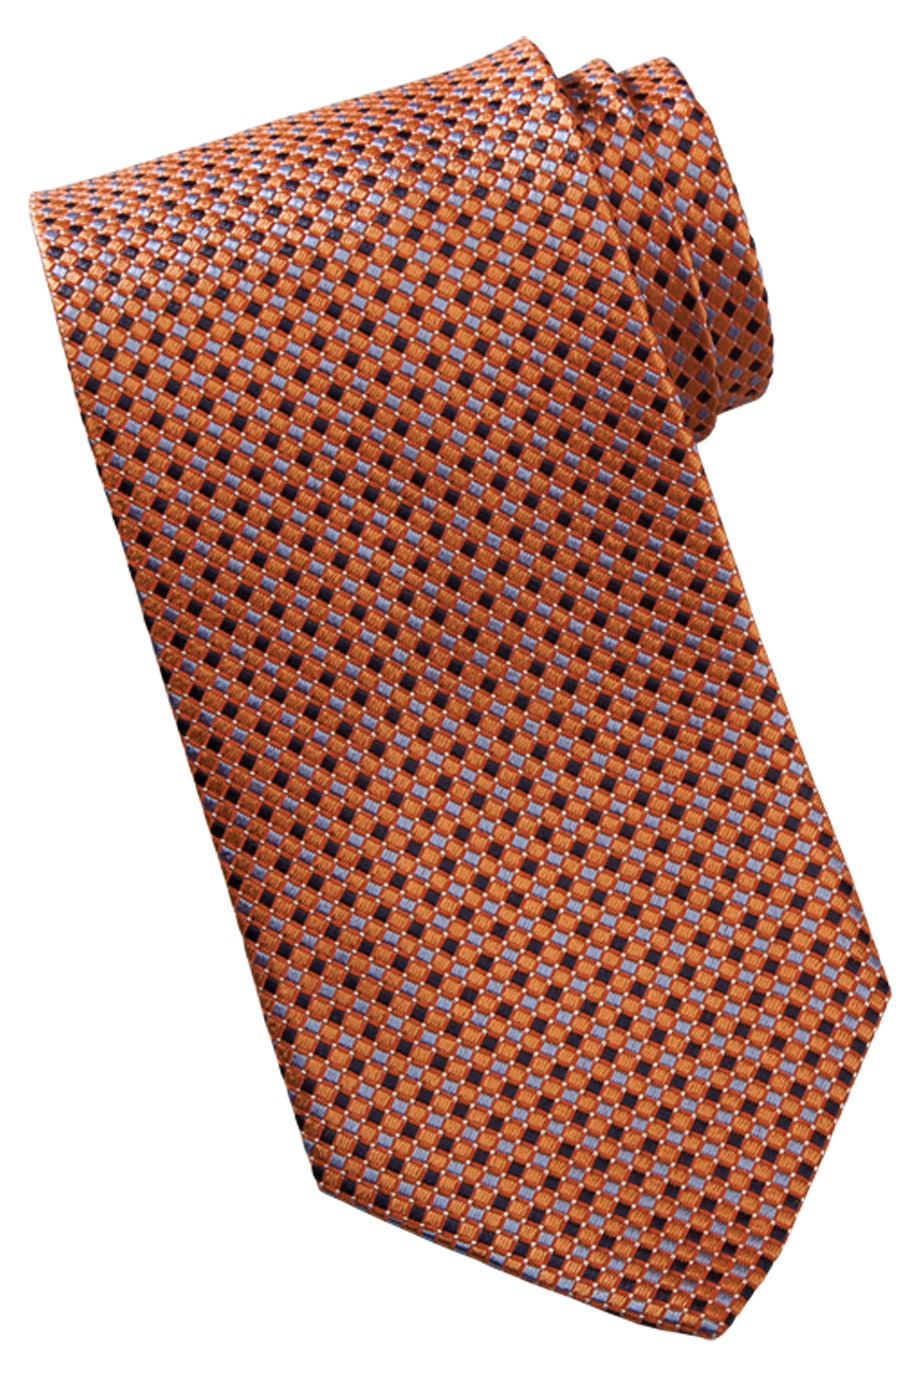 Edwards Garment MD00 - Men's Mini-Diamond Pattern Tie